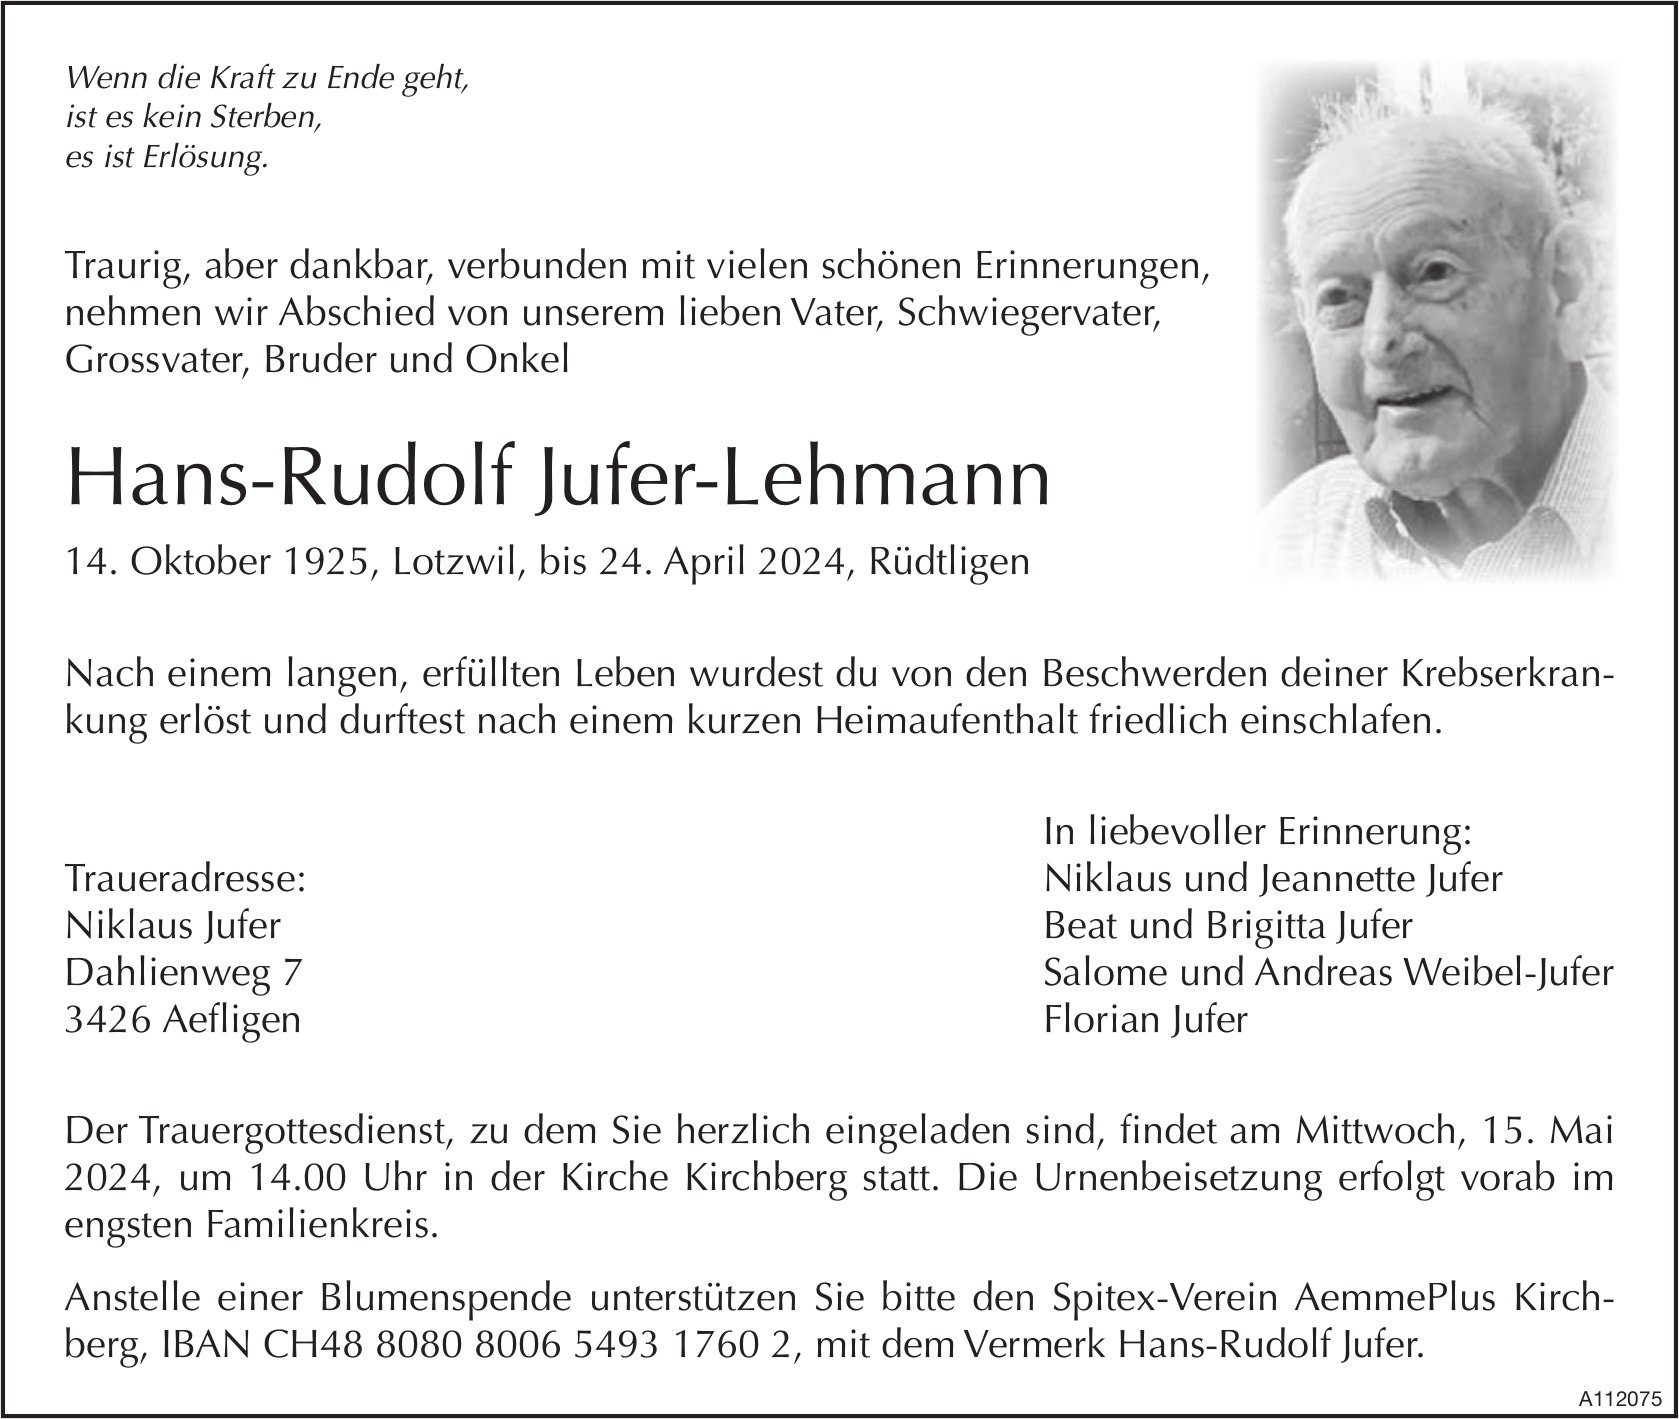 Hans-Rudolf Jufer-Lehmann, April 2024 / TA